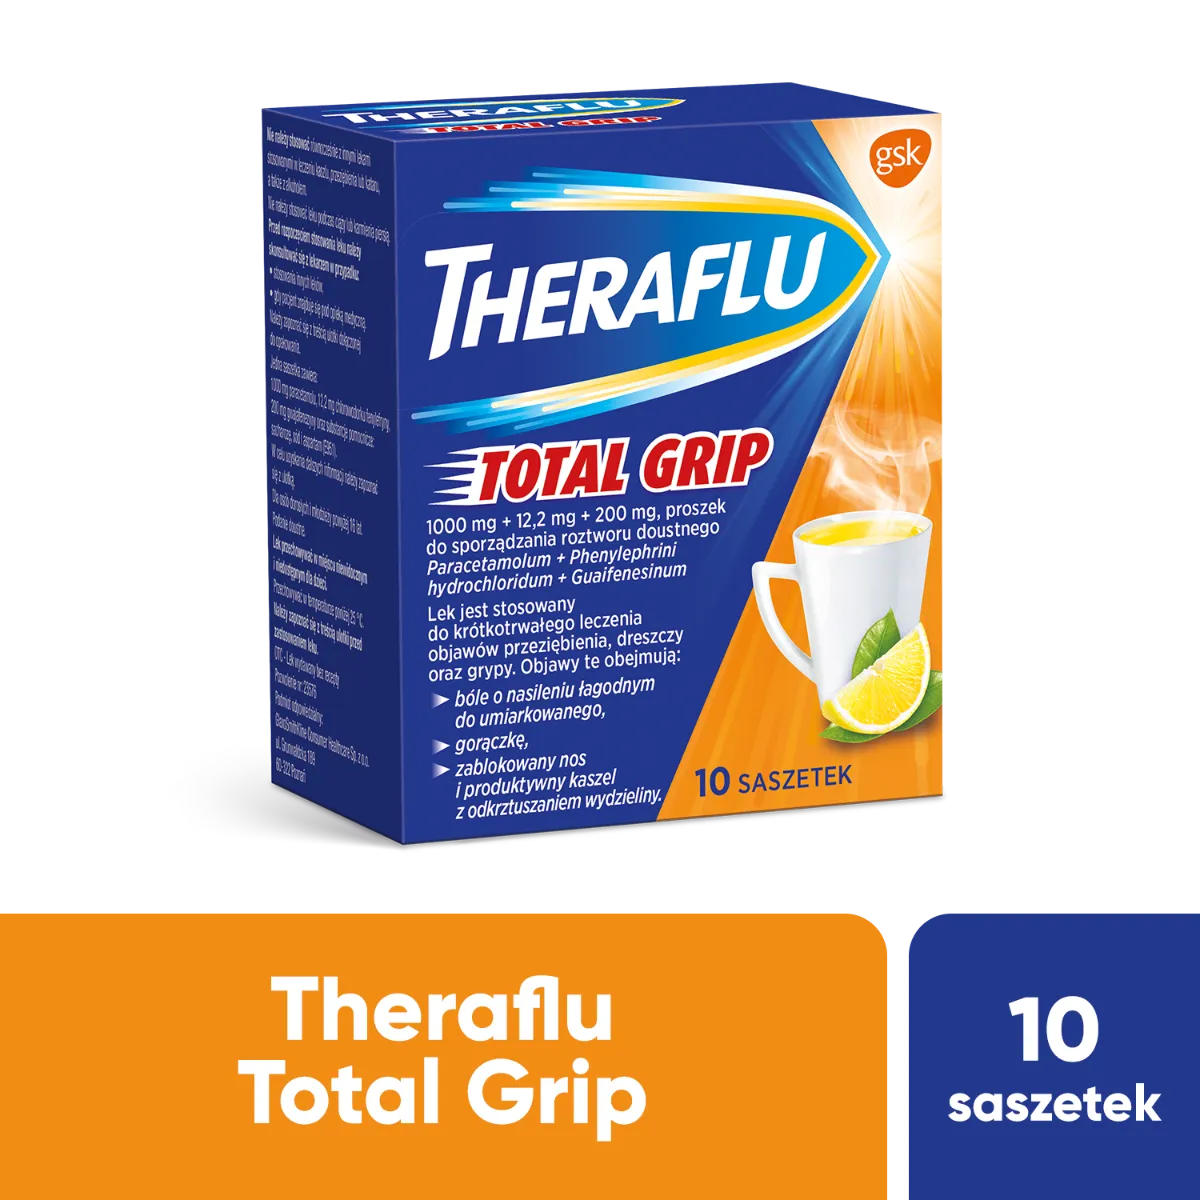 Theraflu Total Grip, 1000 mg + 12,2 mg + 200 mg, 10 saszetek 